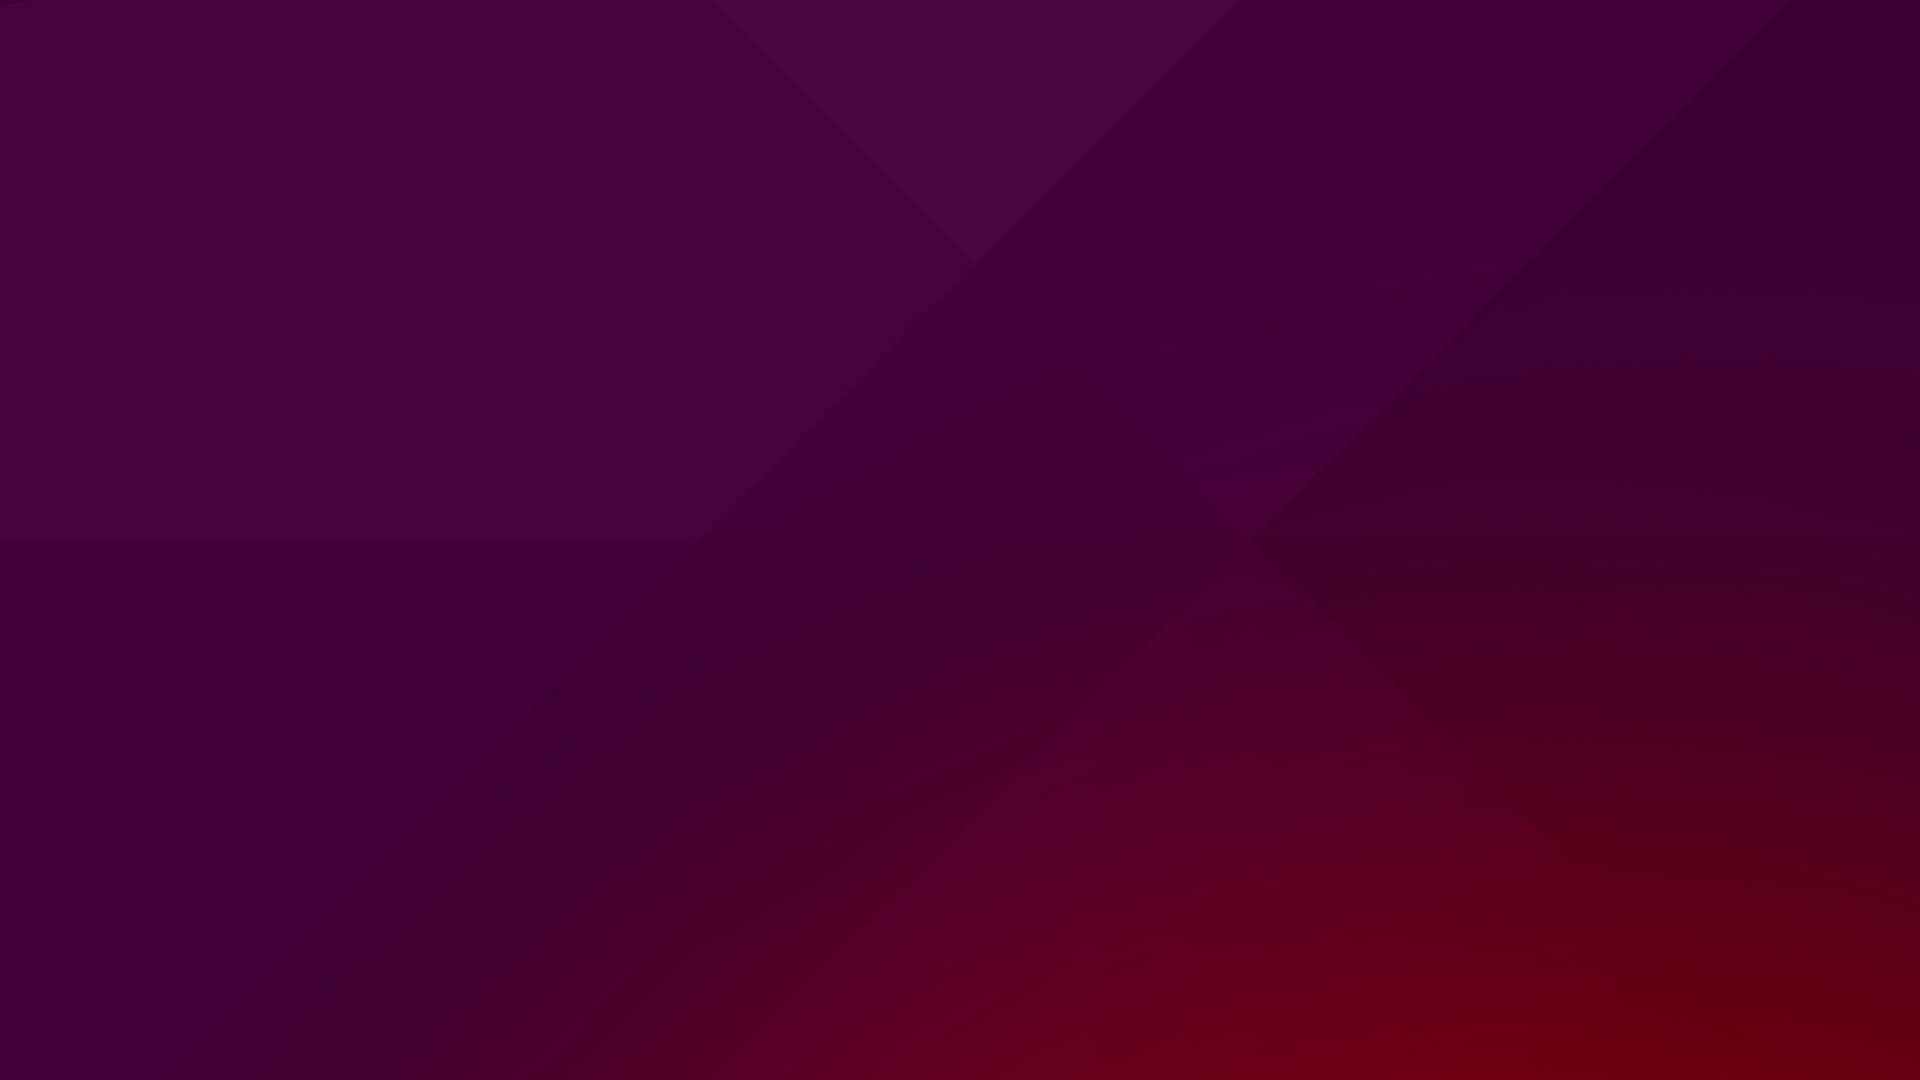 Ubuntu 4096X2304 Wallpaper and Background Image